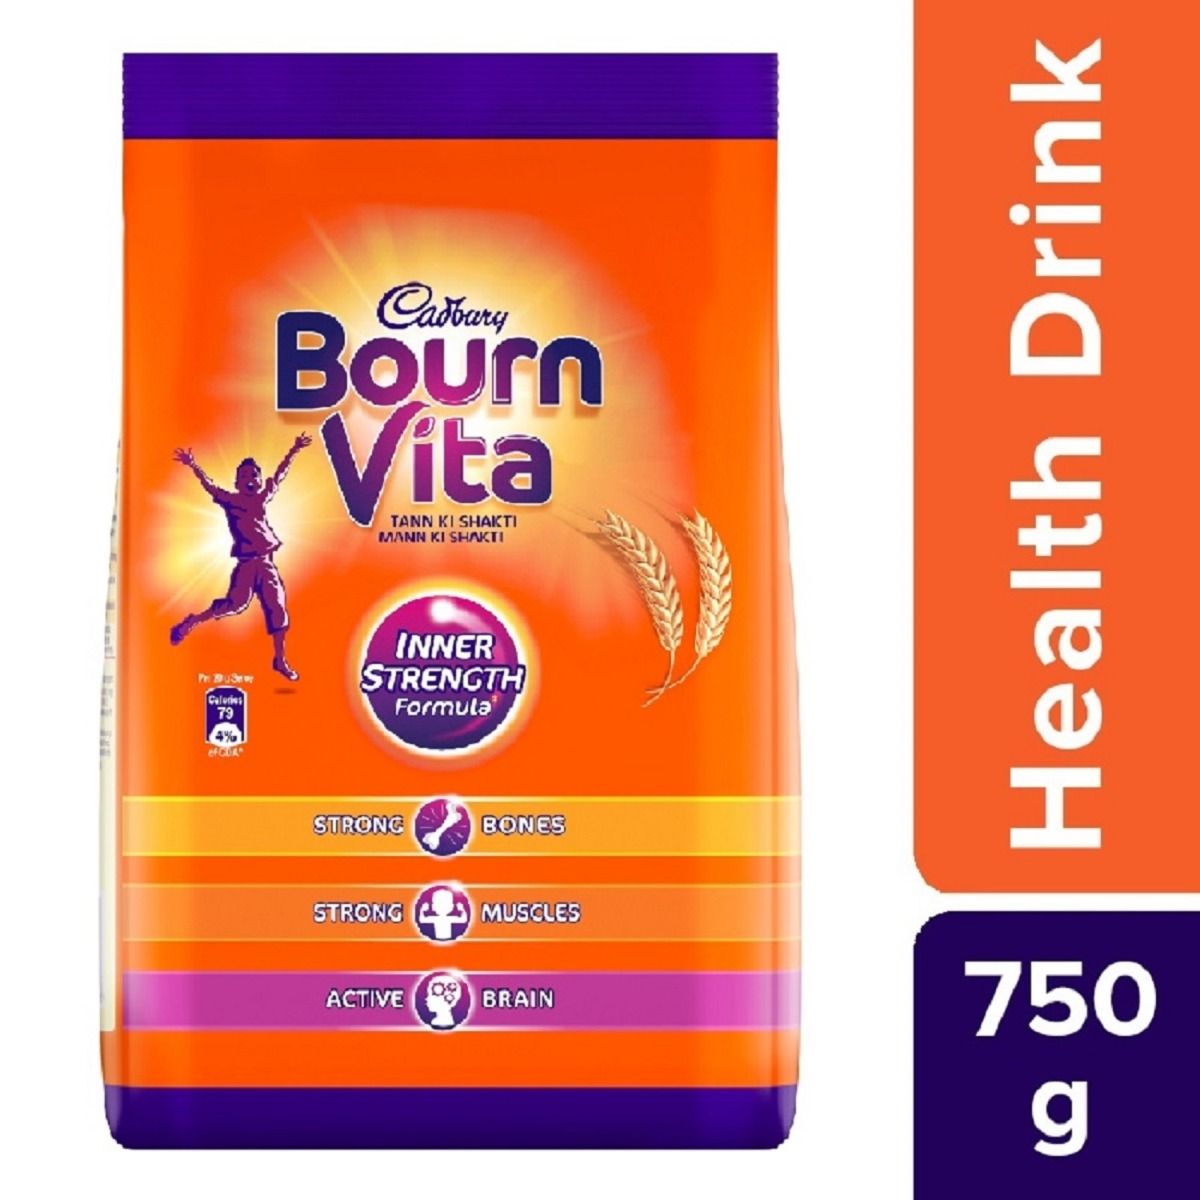 Cadbury Bournvita Nutrition Drink Powder, 750 gm Refill Pack, Pack of 1 